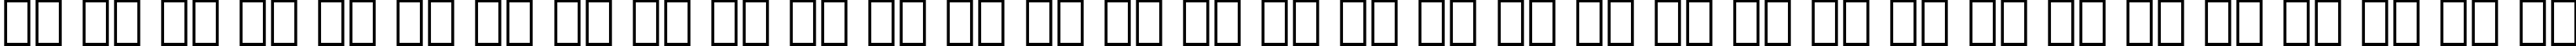 Пример написания русского алфавита шрифтом Bodoni Bold Italic BT